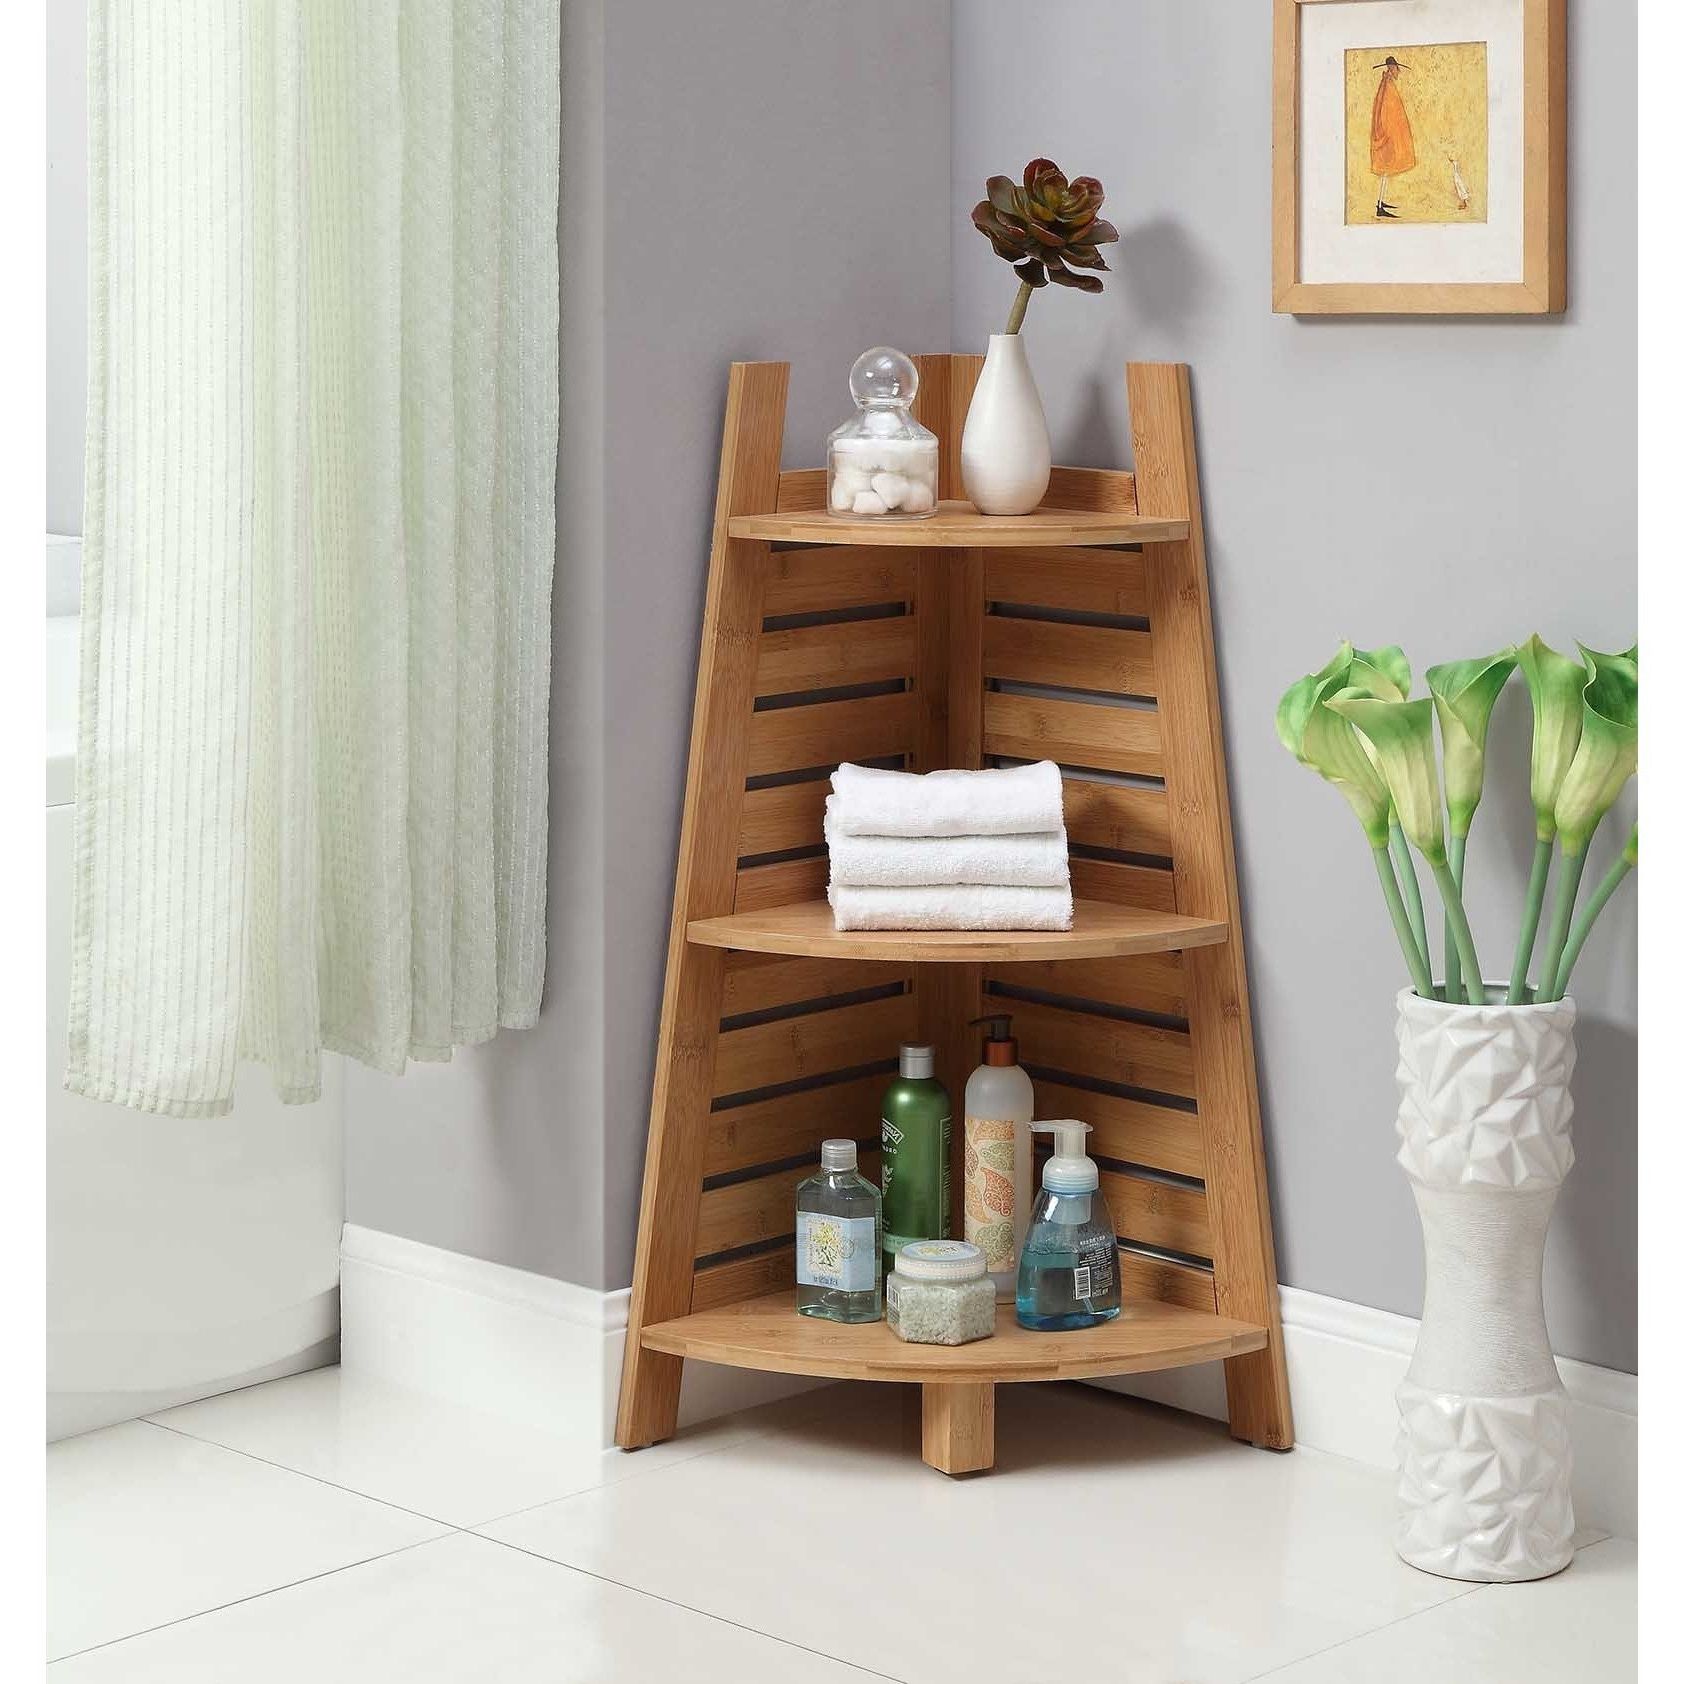 2019 Buy Linen Tower Bathroom Cabinets & Storage Online At Regarding Arminta Wood Sideboards (View 18 of 20)